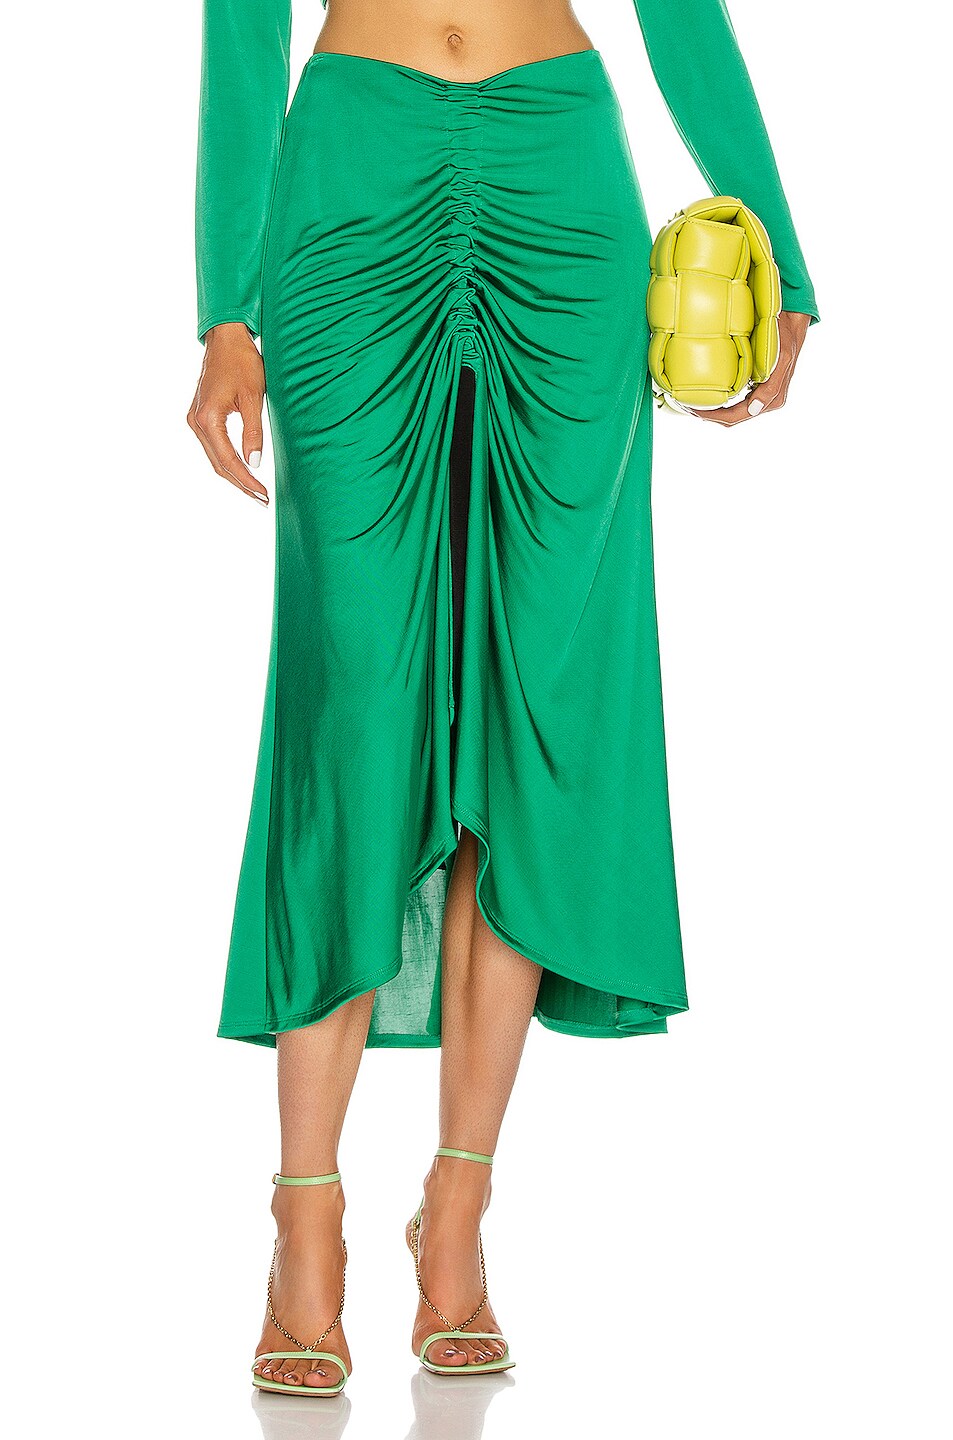 Alexis Didi Skirt in Emerald | FWRD